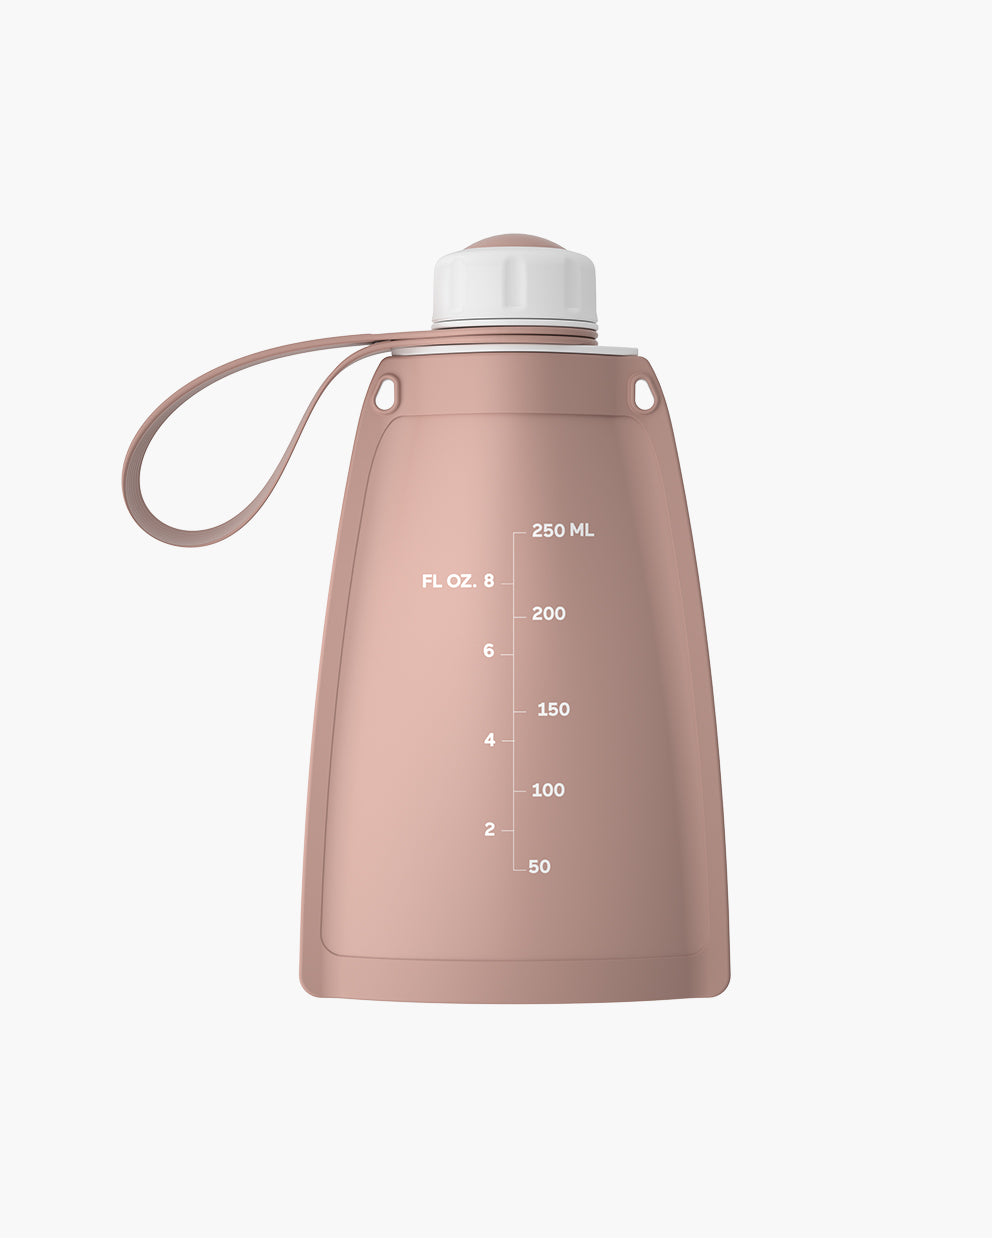 Reusable Silicone Breastmilk Storage Bags 5pcs Breastfeeding Essentials